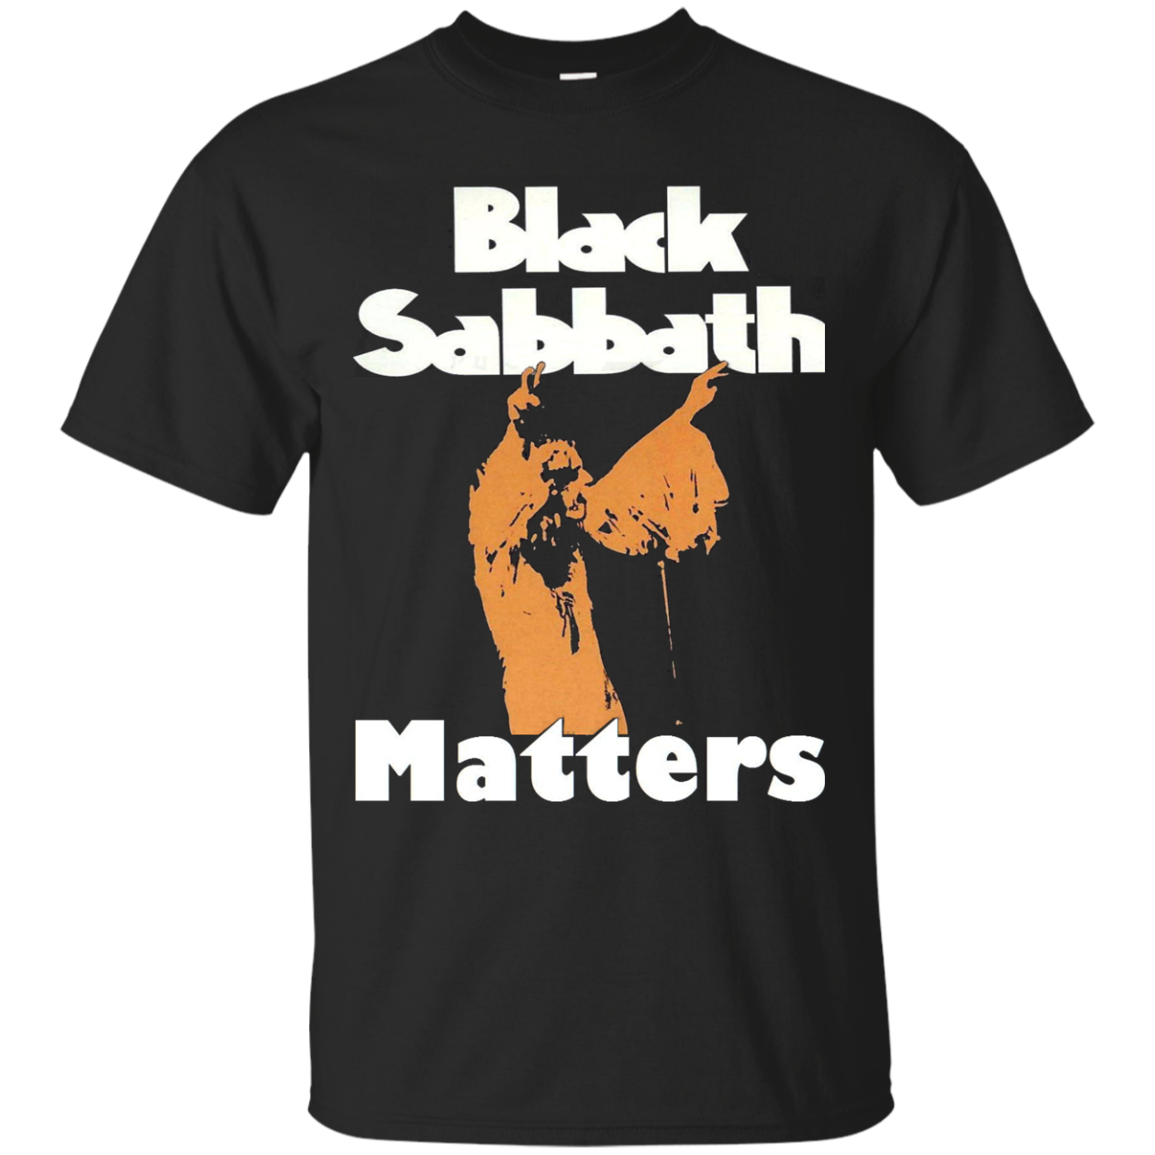 Black Sabbath Shirts Black Sabbath Matters -